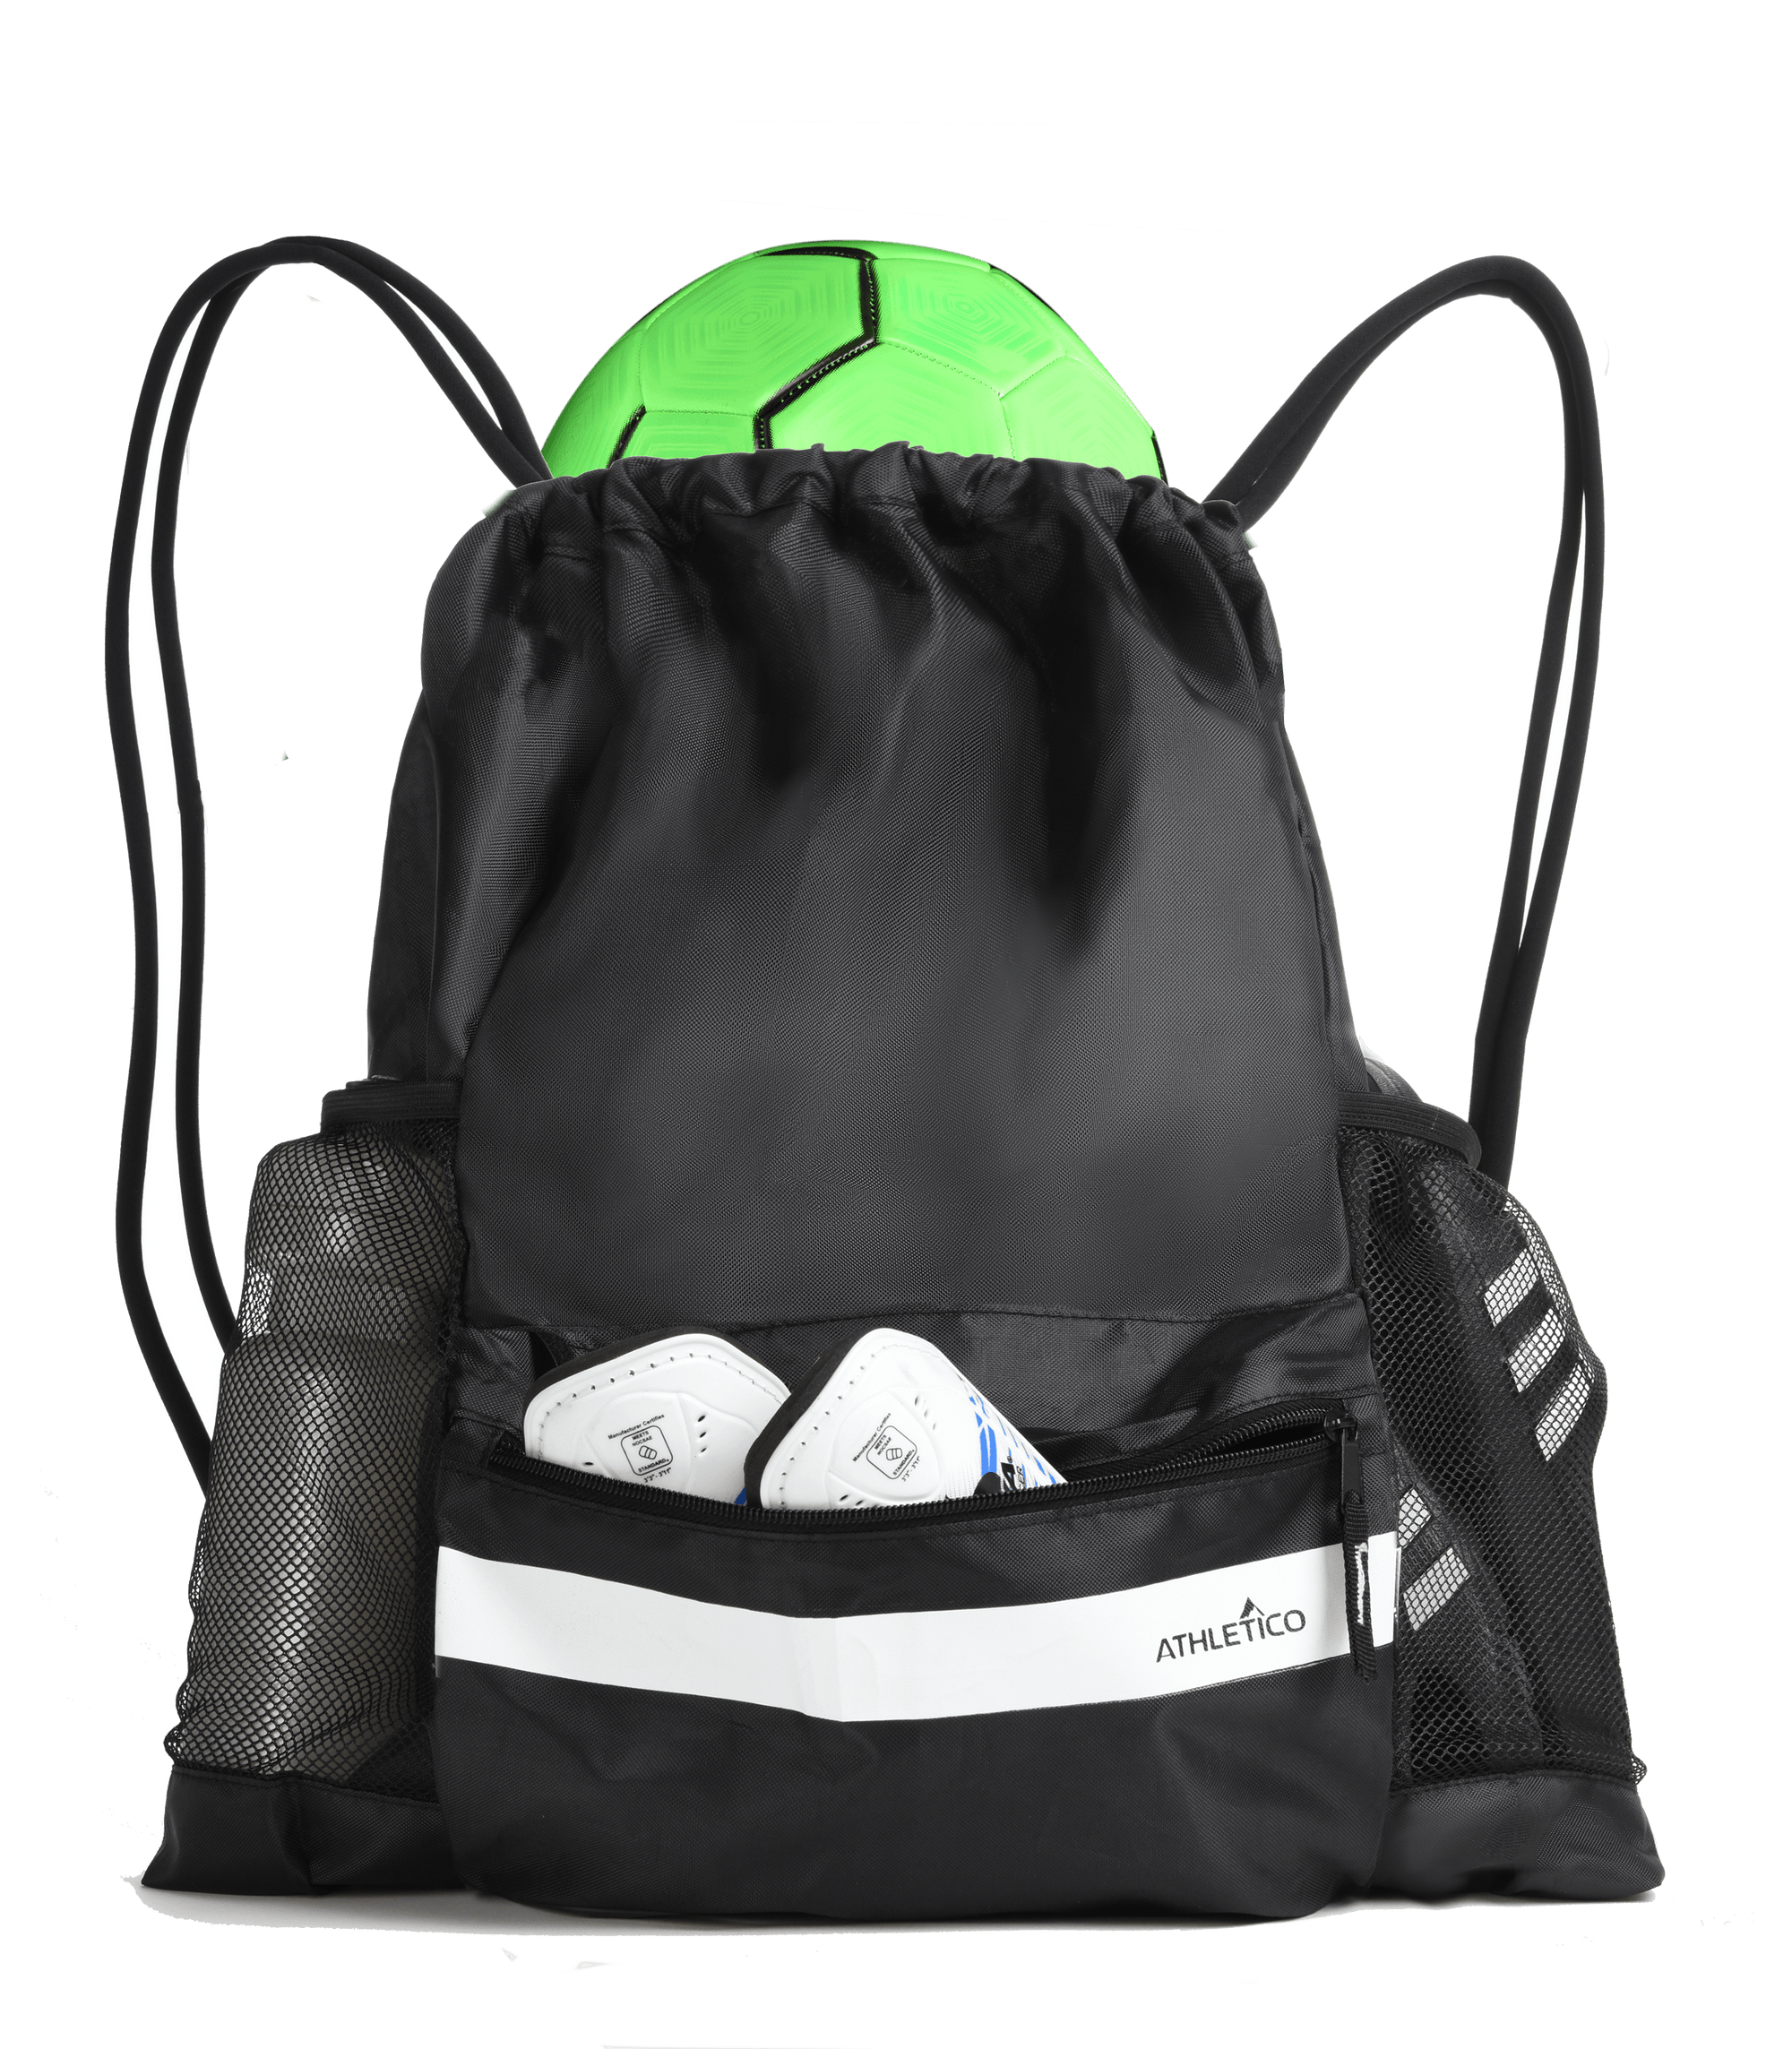 Athletico Drawstring Soccer Bag - Athletico